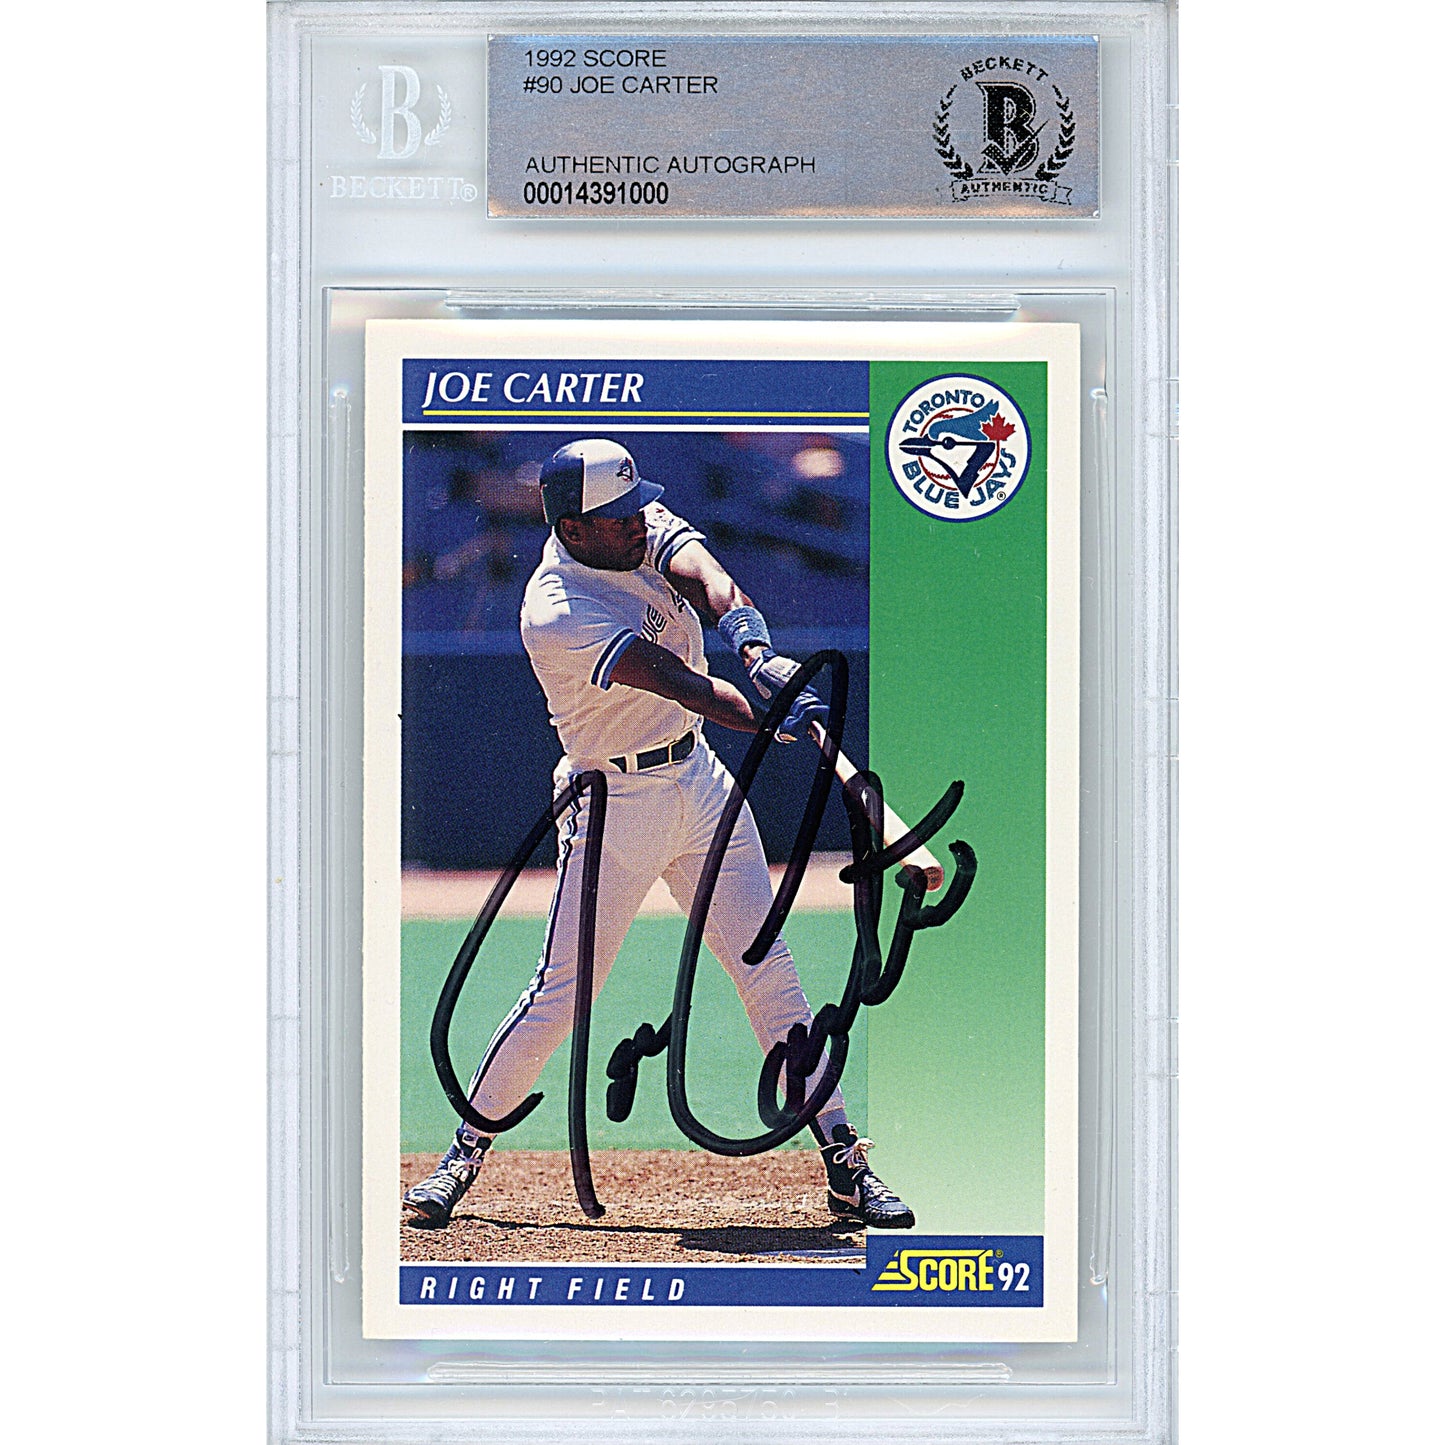 Baseballs- Autographed- Joe Carter Signed Toronto Blue Jays 1992 Score Baseball Card Beckett Authentication Slabbed 00014391000 - 101